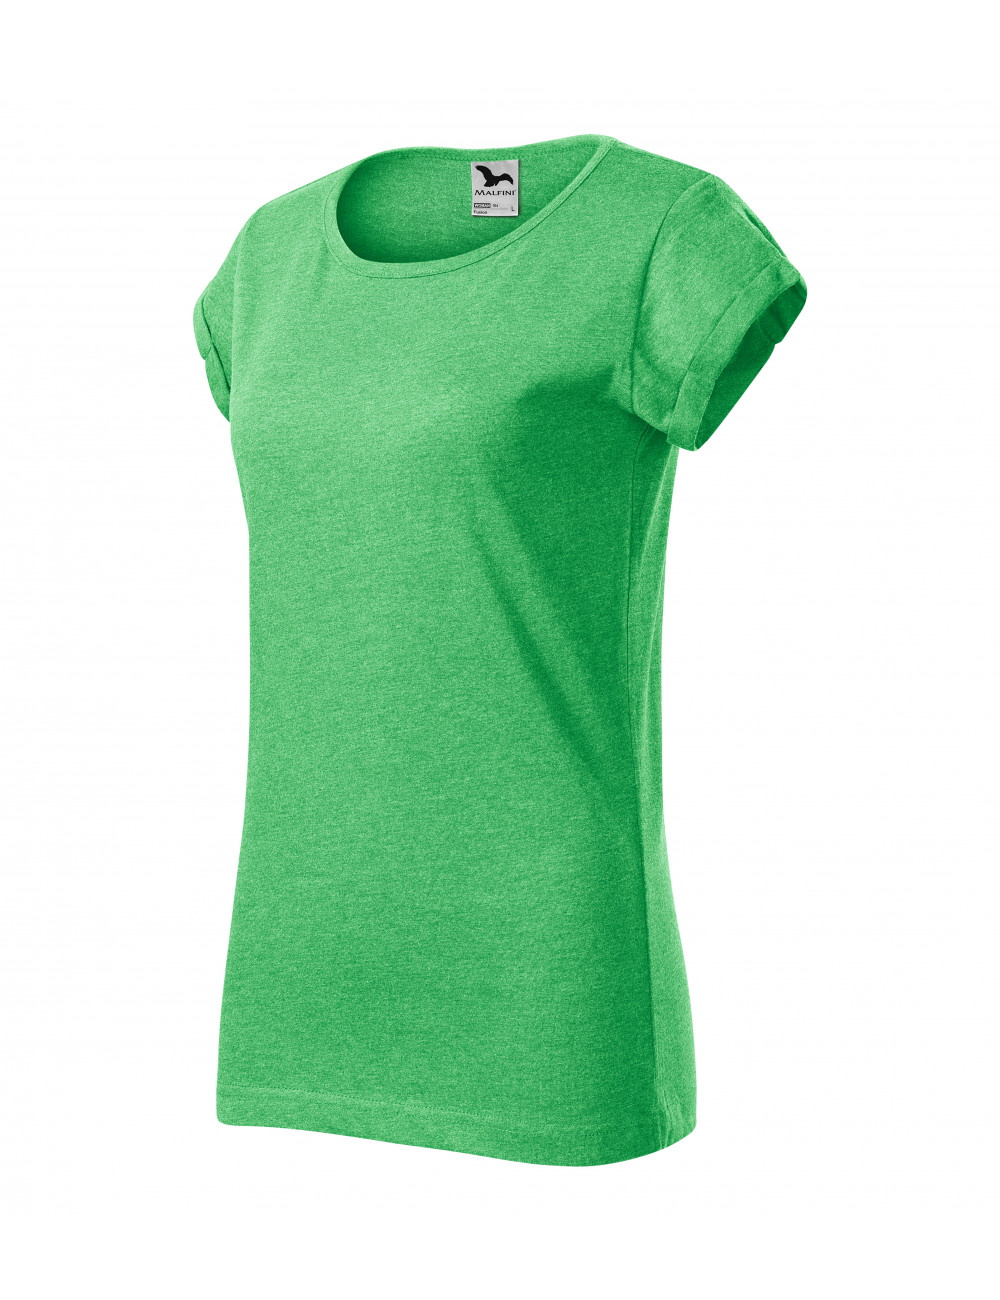 Damen-Fusion-T-Shirt 164 grün meliert Adler Malfini